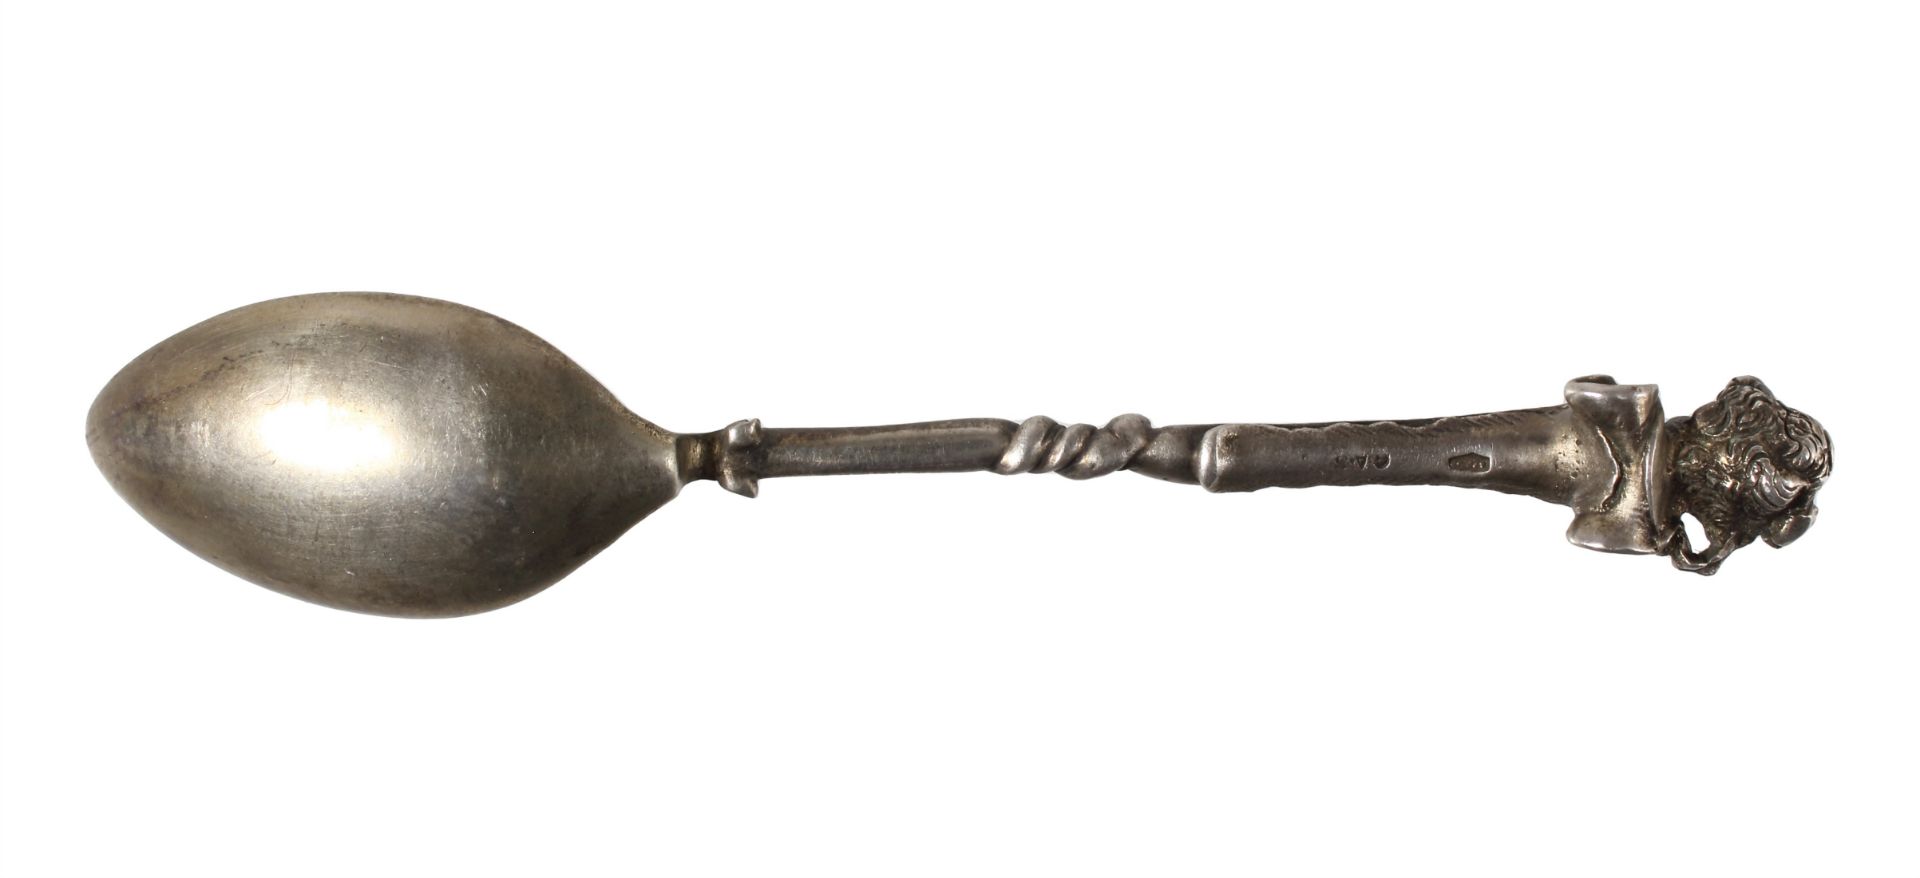 mocha spoon, Vienna around 1900, silver, signed, G.A.S. (Anton Scheid), enamel picture: LIEGE ... - Image 2 of 3